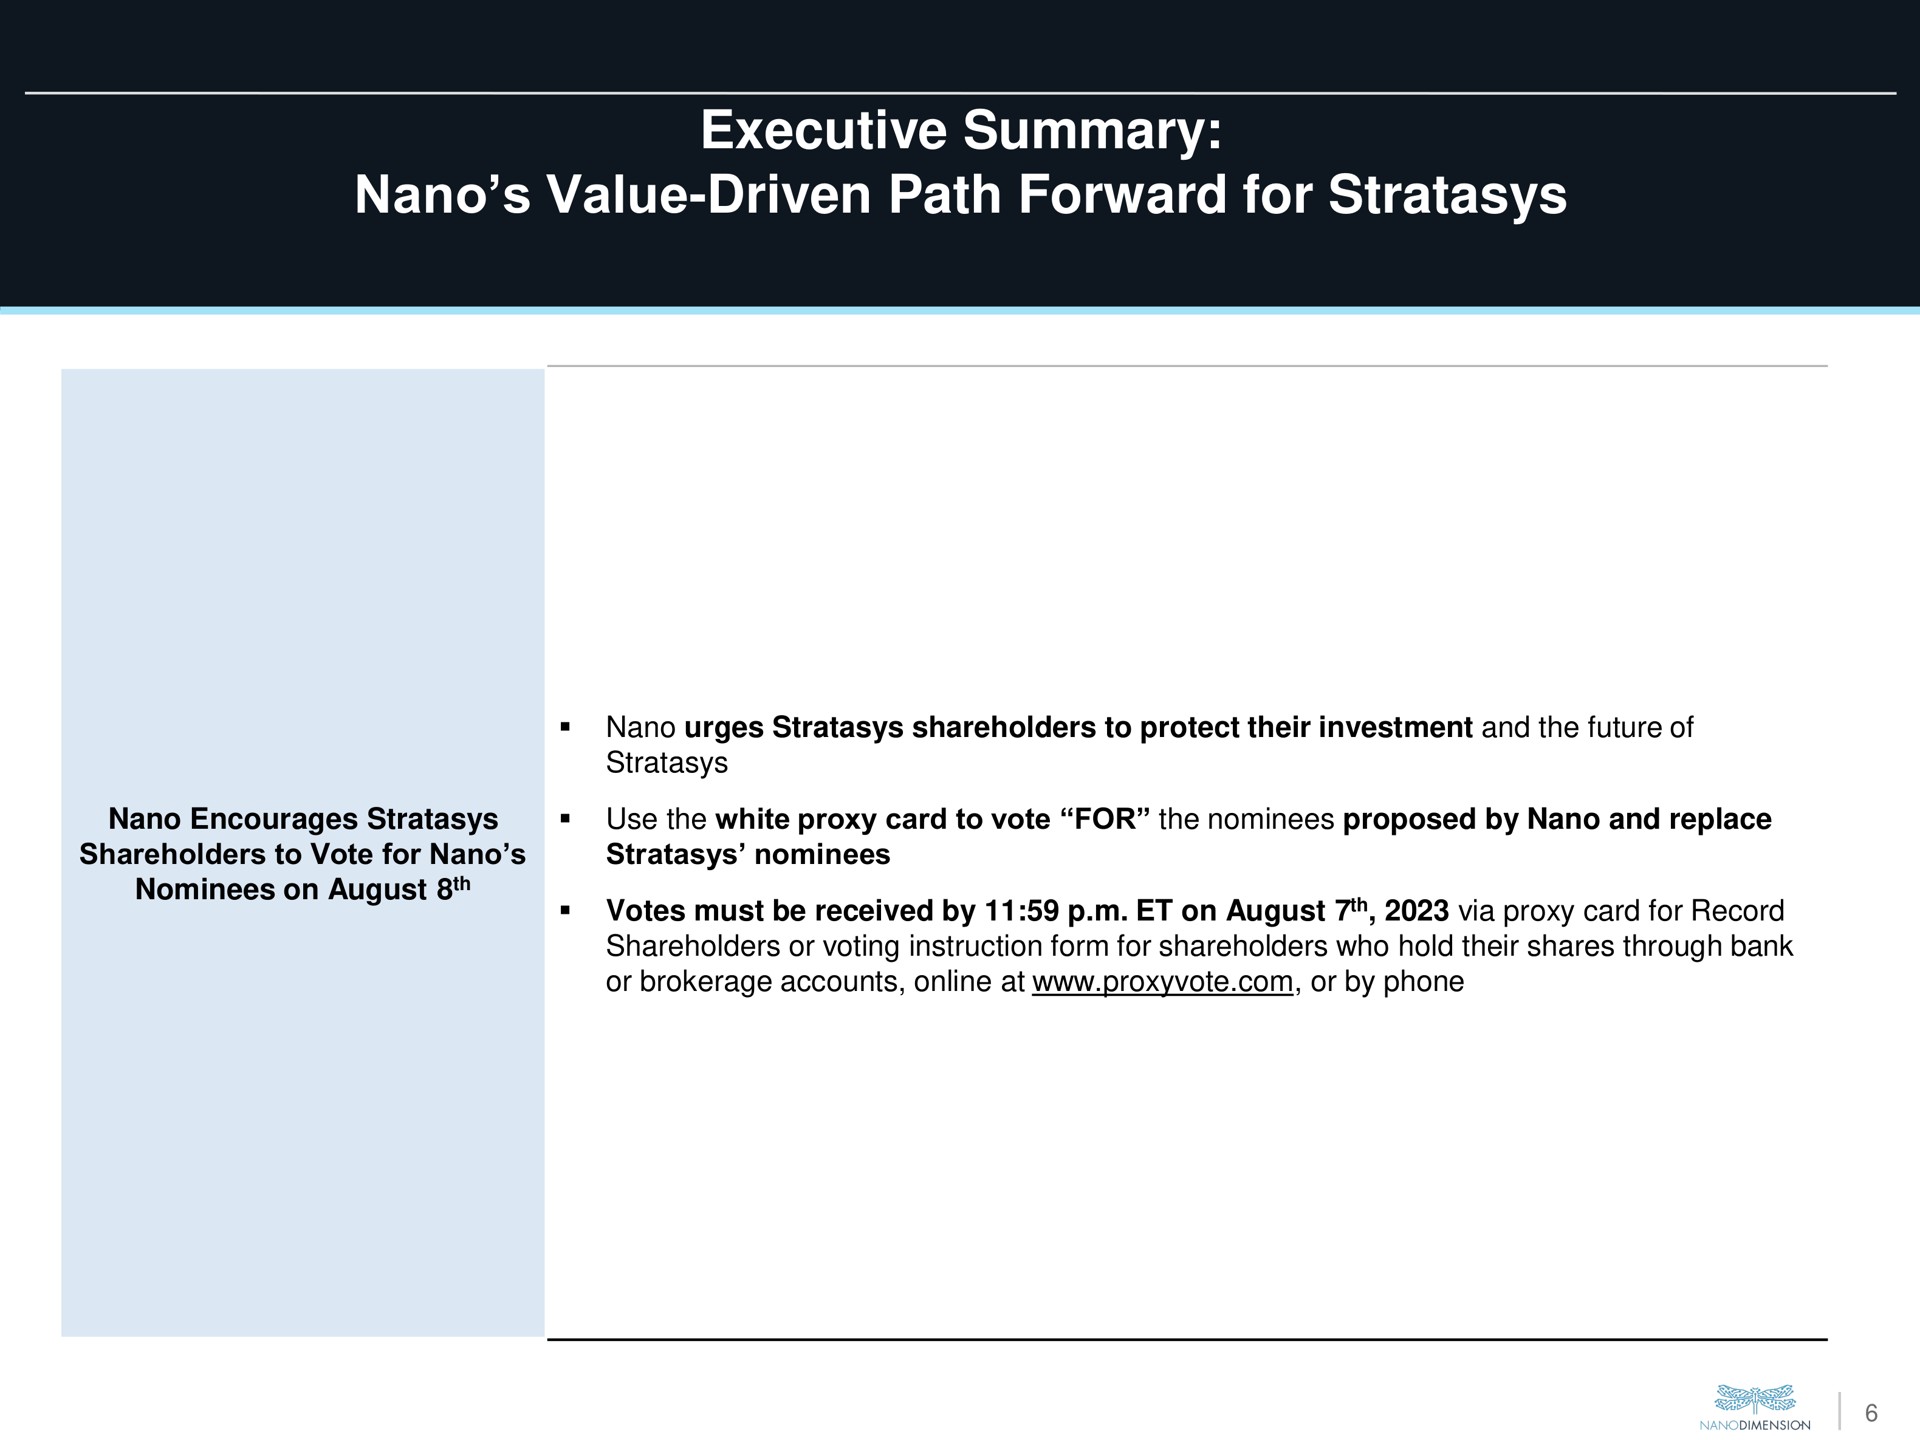 executive summary value driven path forward for | Nano Dimension